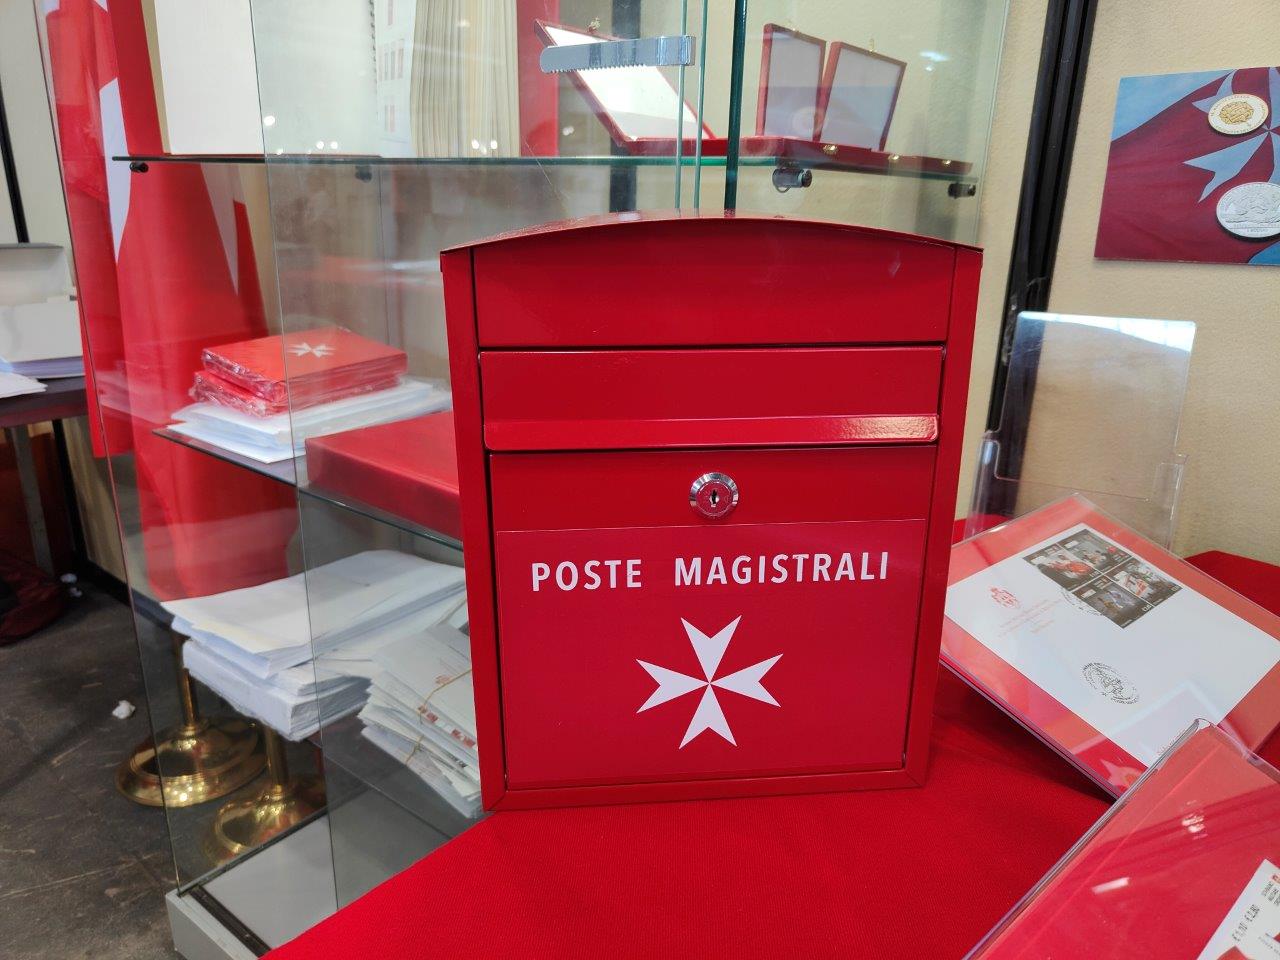 Poste Magistrali at the 134th edition of Veronafil